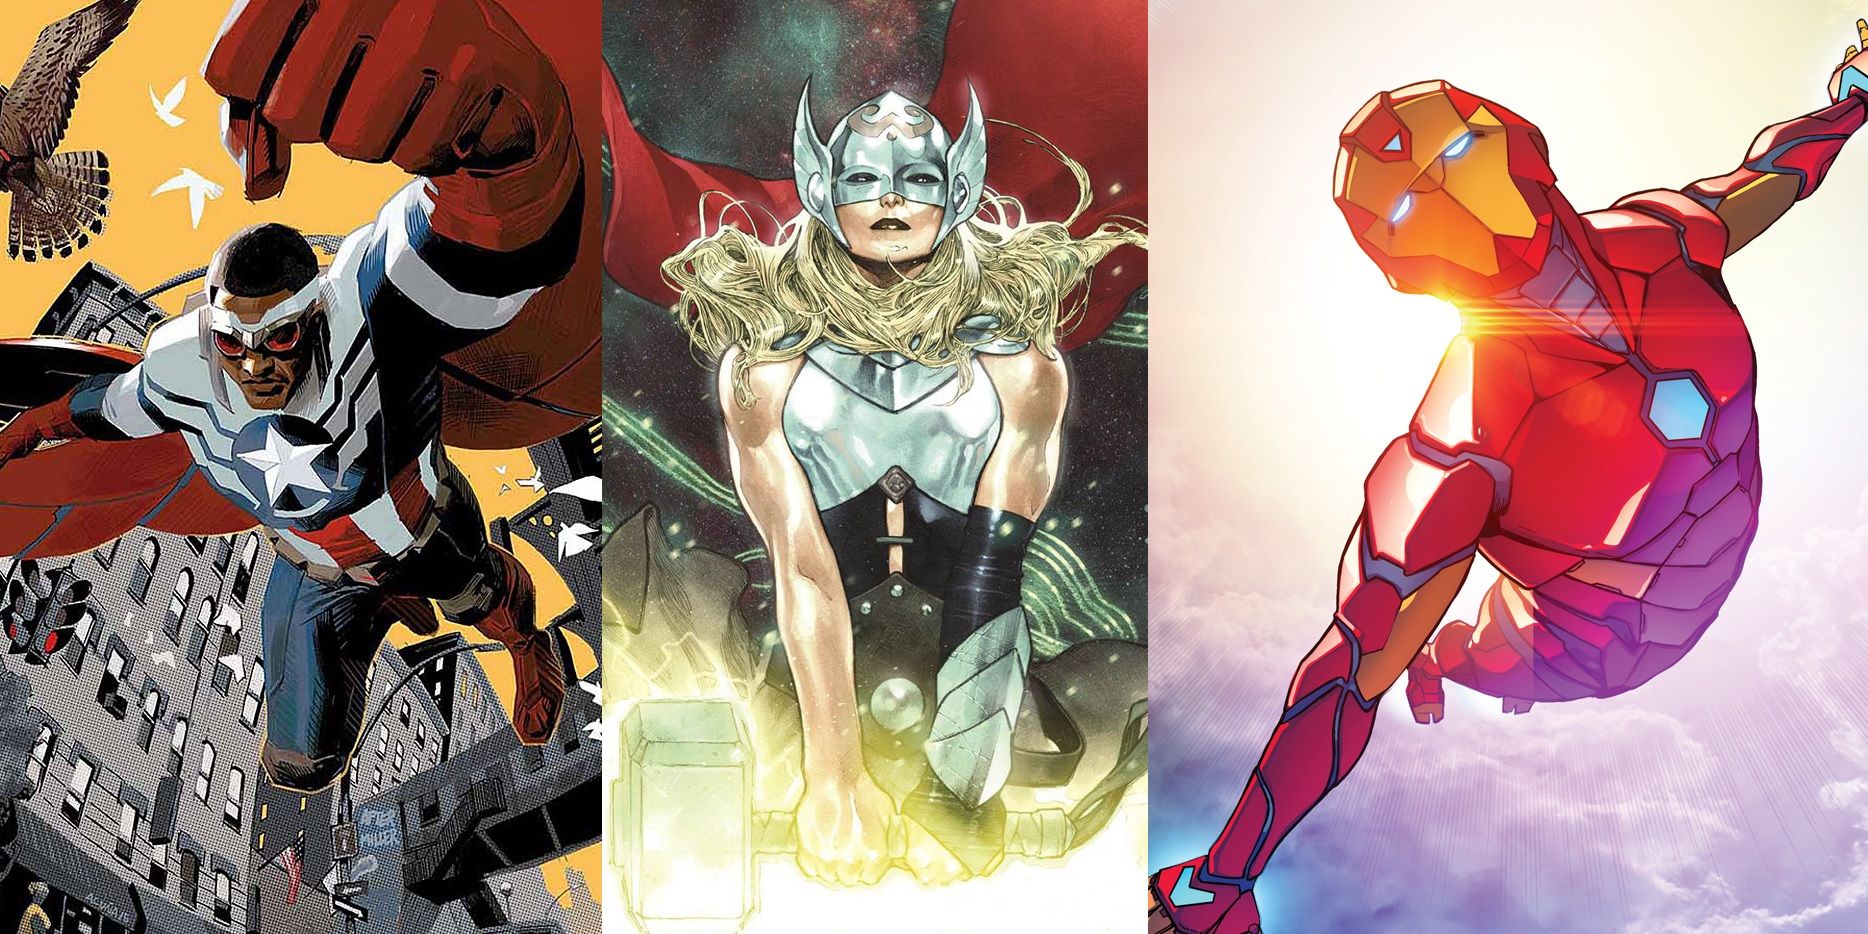 Avengers Trinity of Sam Wilson Captain America, Jane Foster Thor, and Riri Williams Iron Man or Ironheart